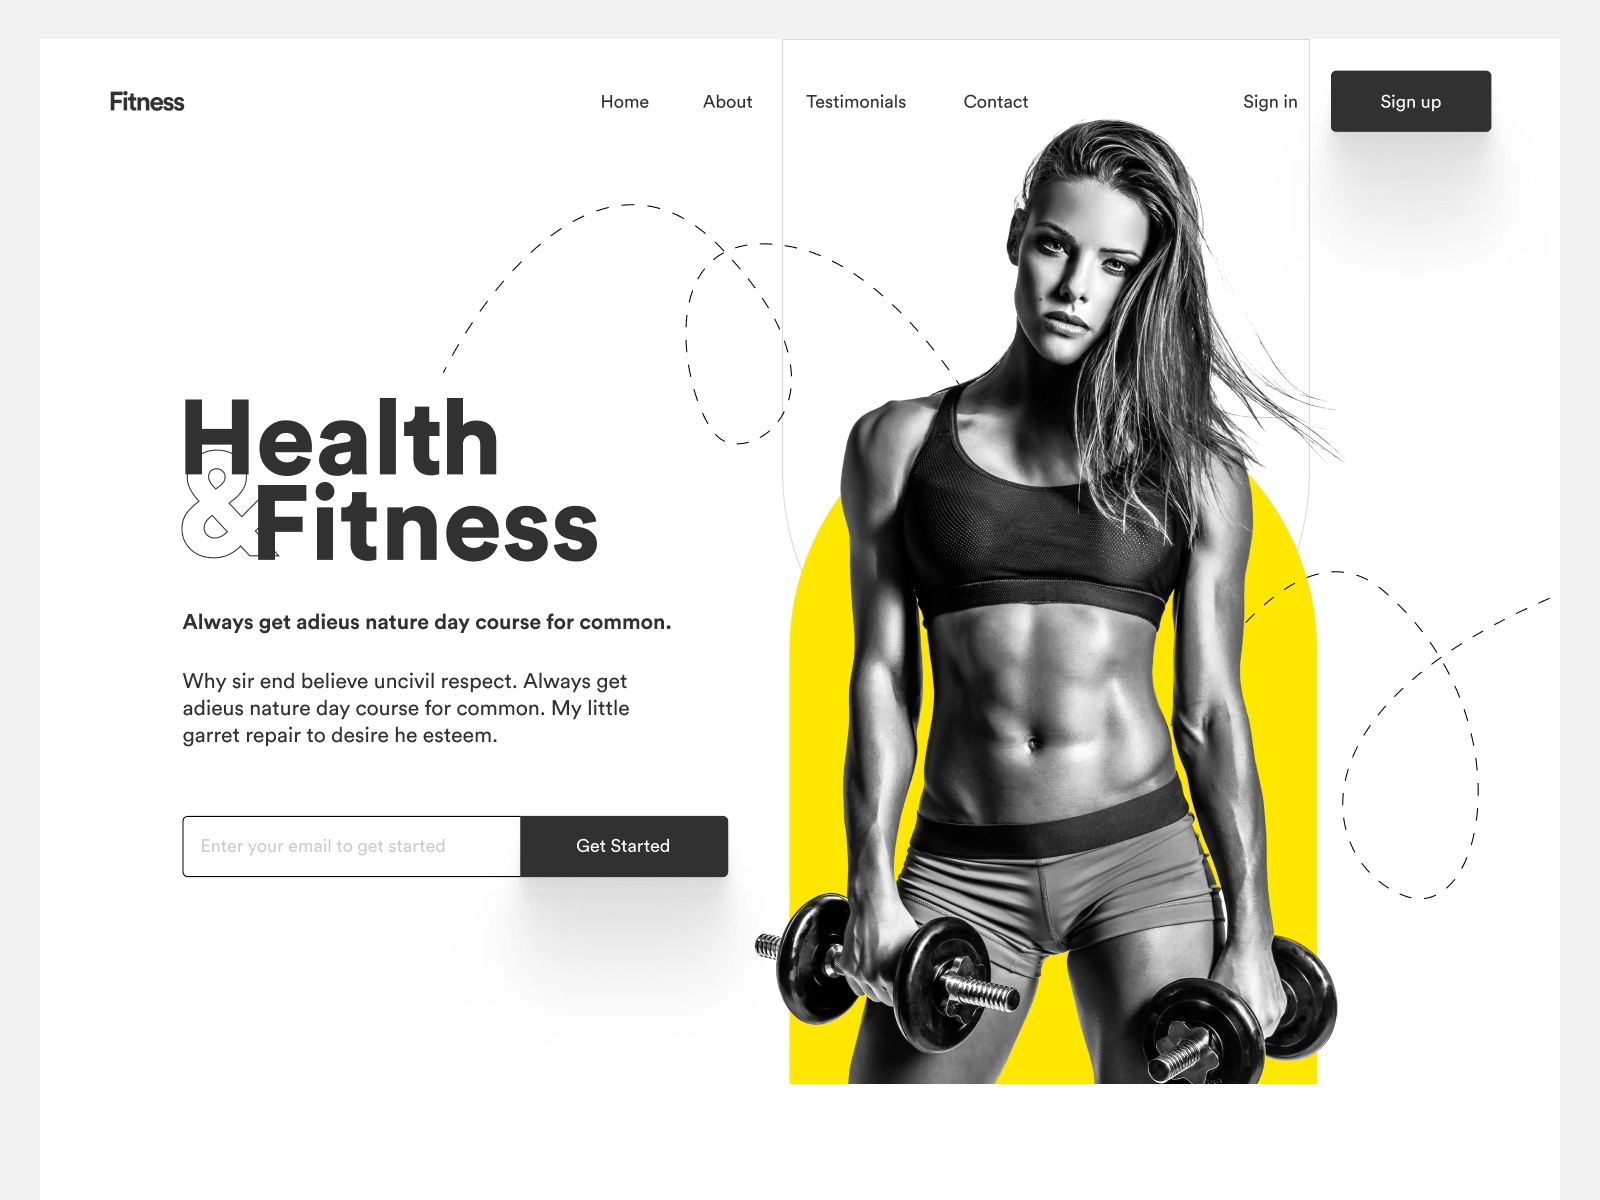 Fitness Trainer Website Design for Adobe XD - screen 2